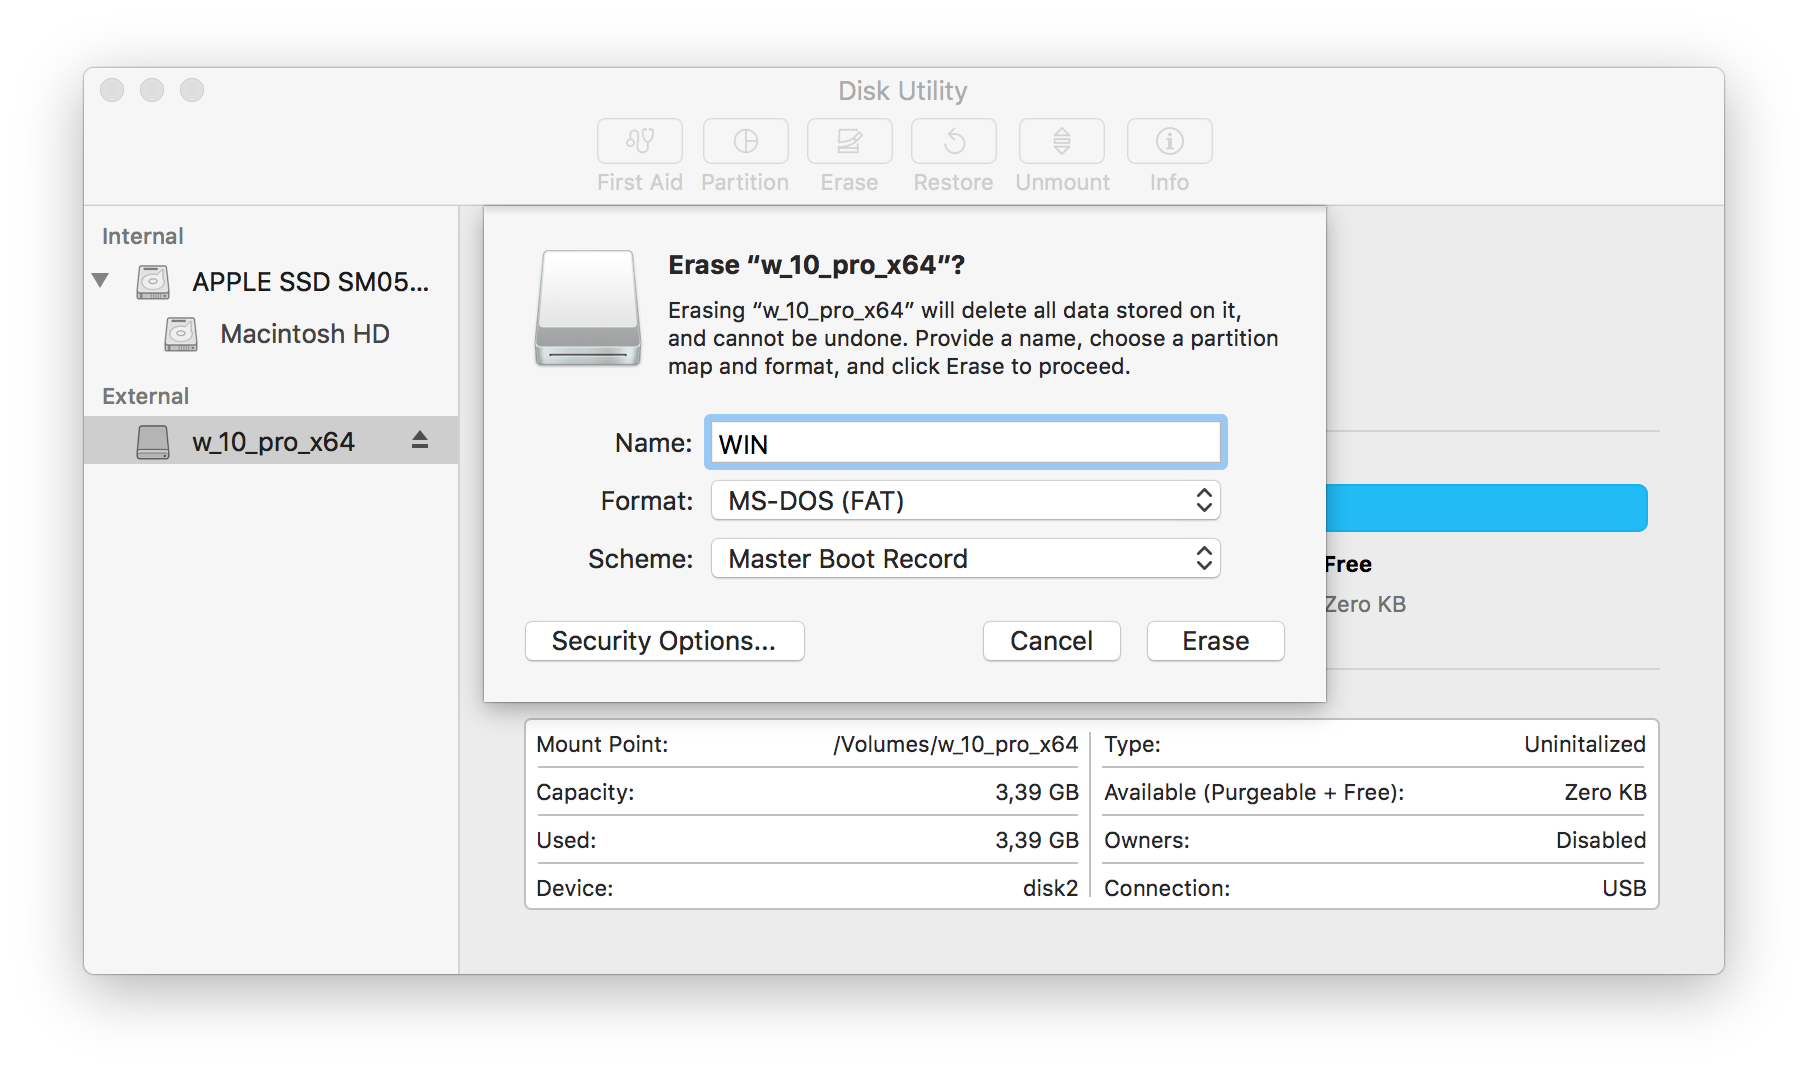 universal usb installer for mac osx 10.7.5